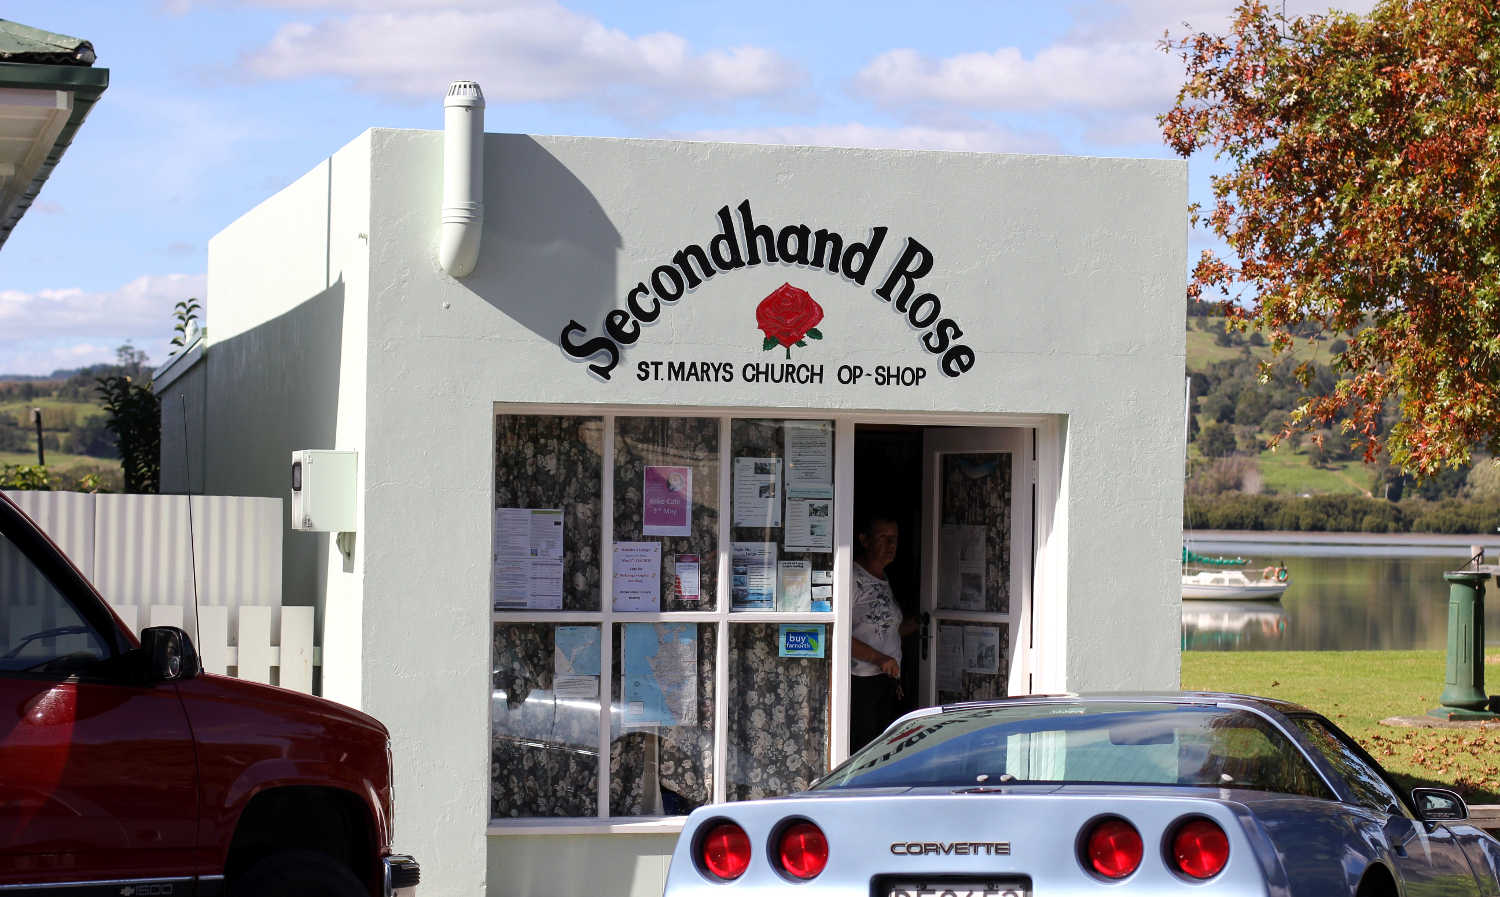 Second Hand Rose Op Shop in Kohukohu @David Green